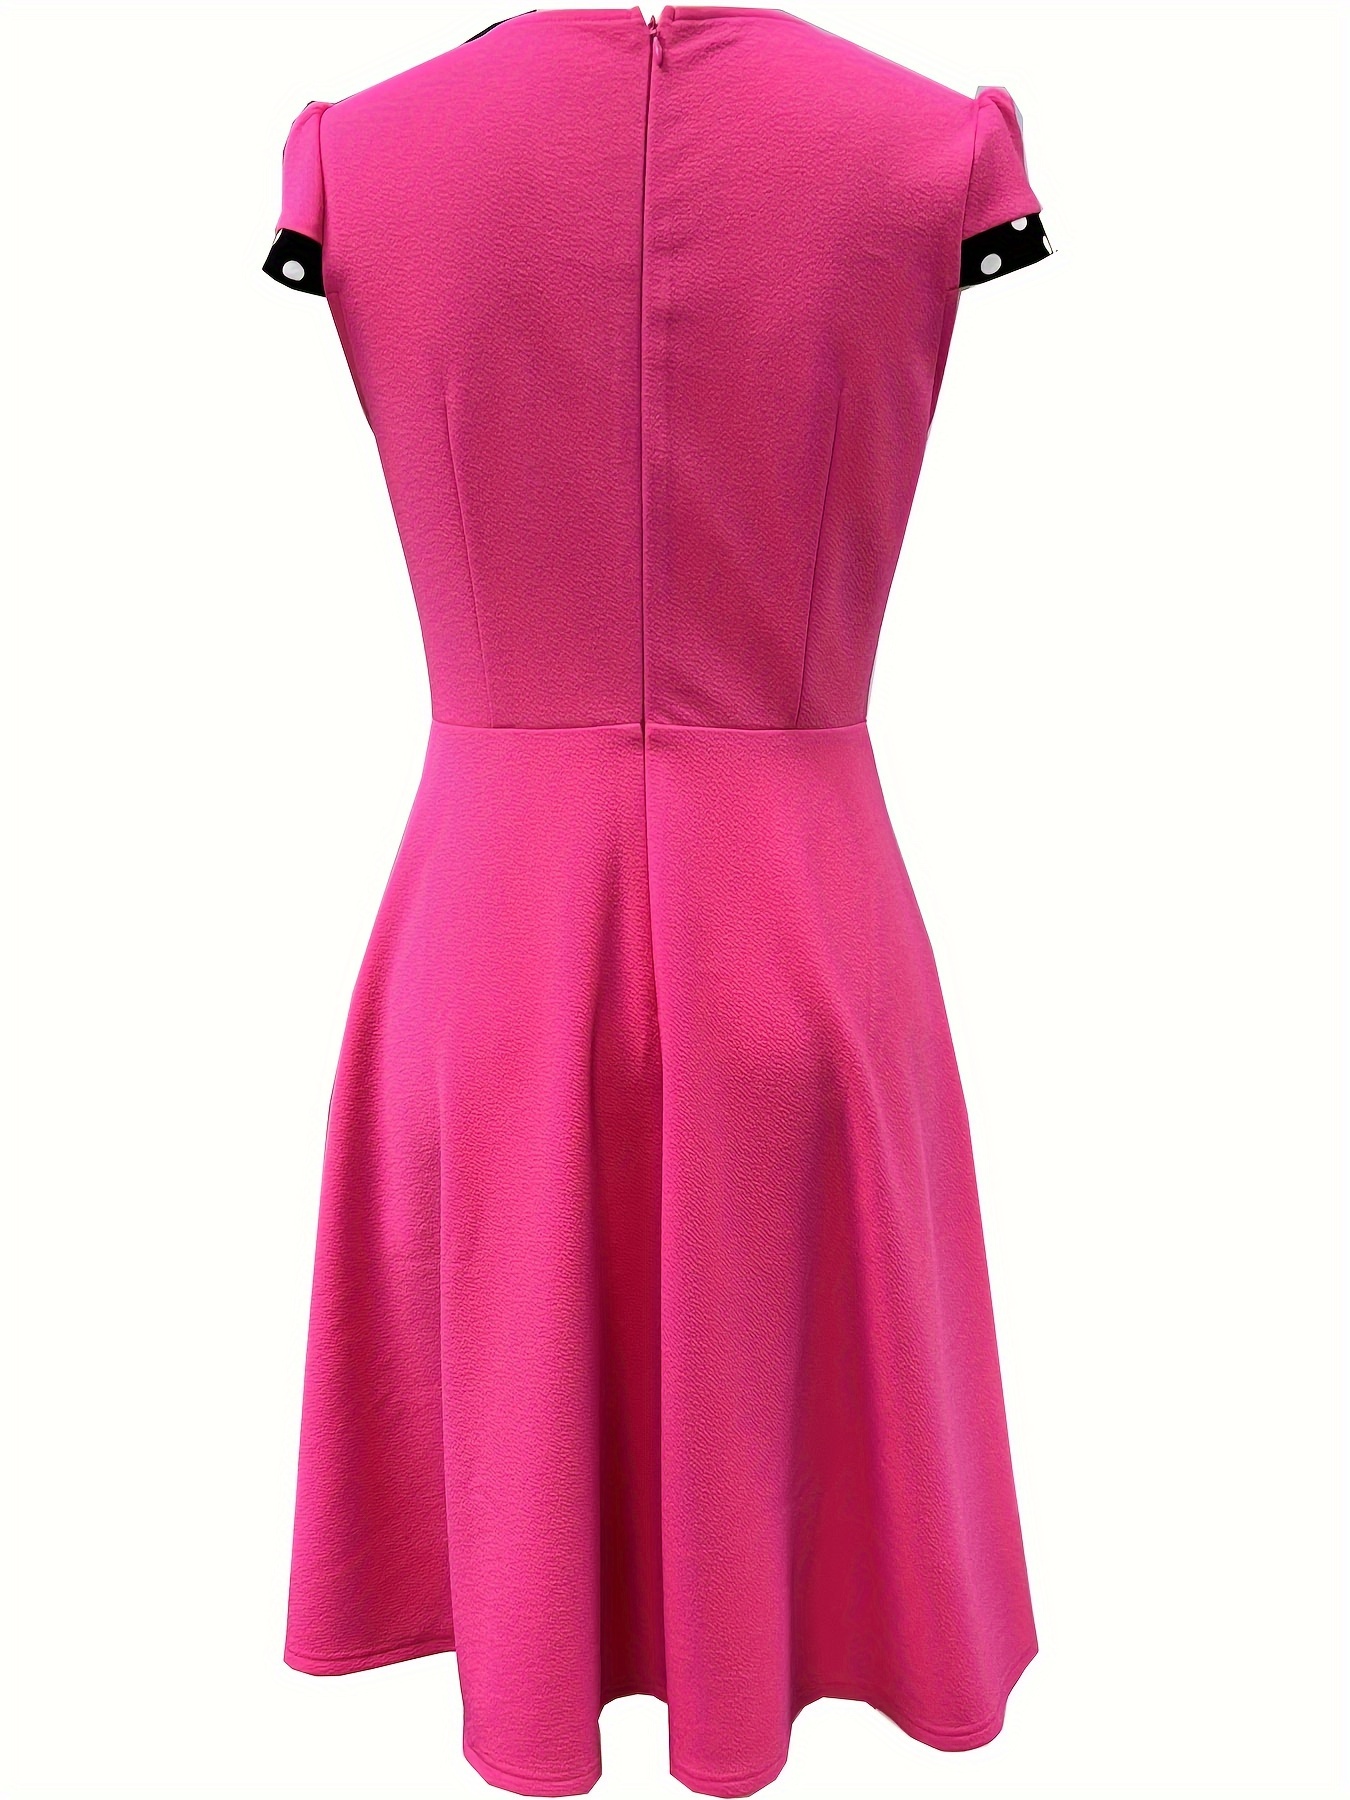 TOPSHOP Colorblock Dress in Pink